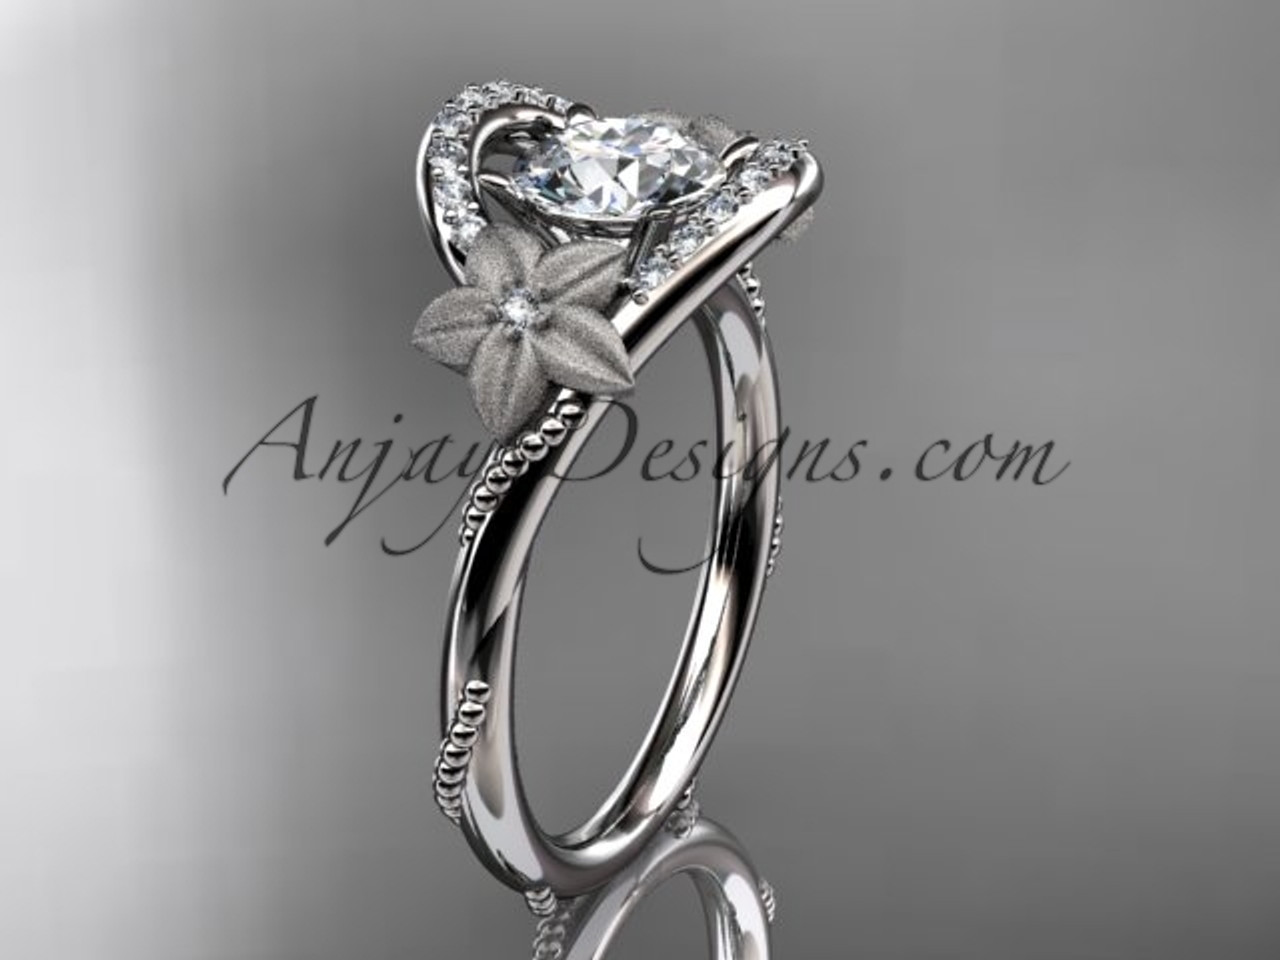 Daisy Ring in Silver and Gold | Unique Handmade Jewelry - Zoran Designs